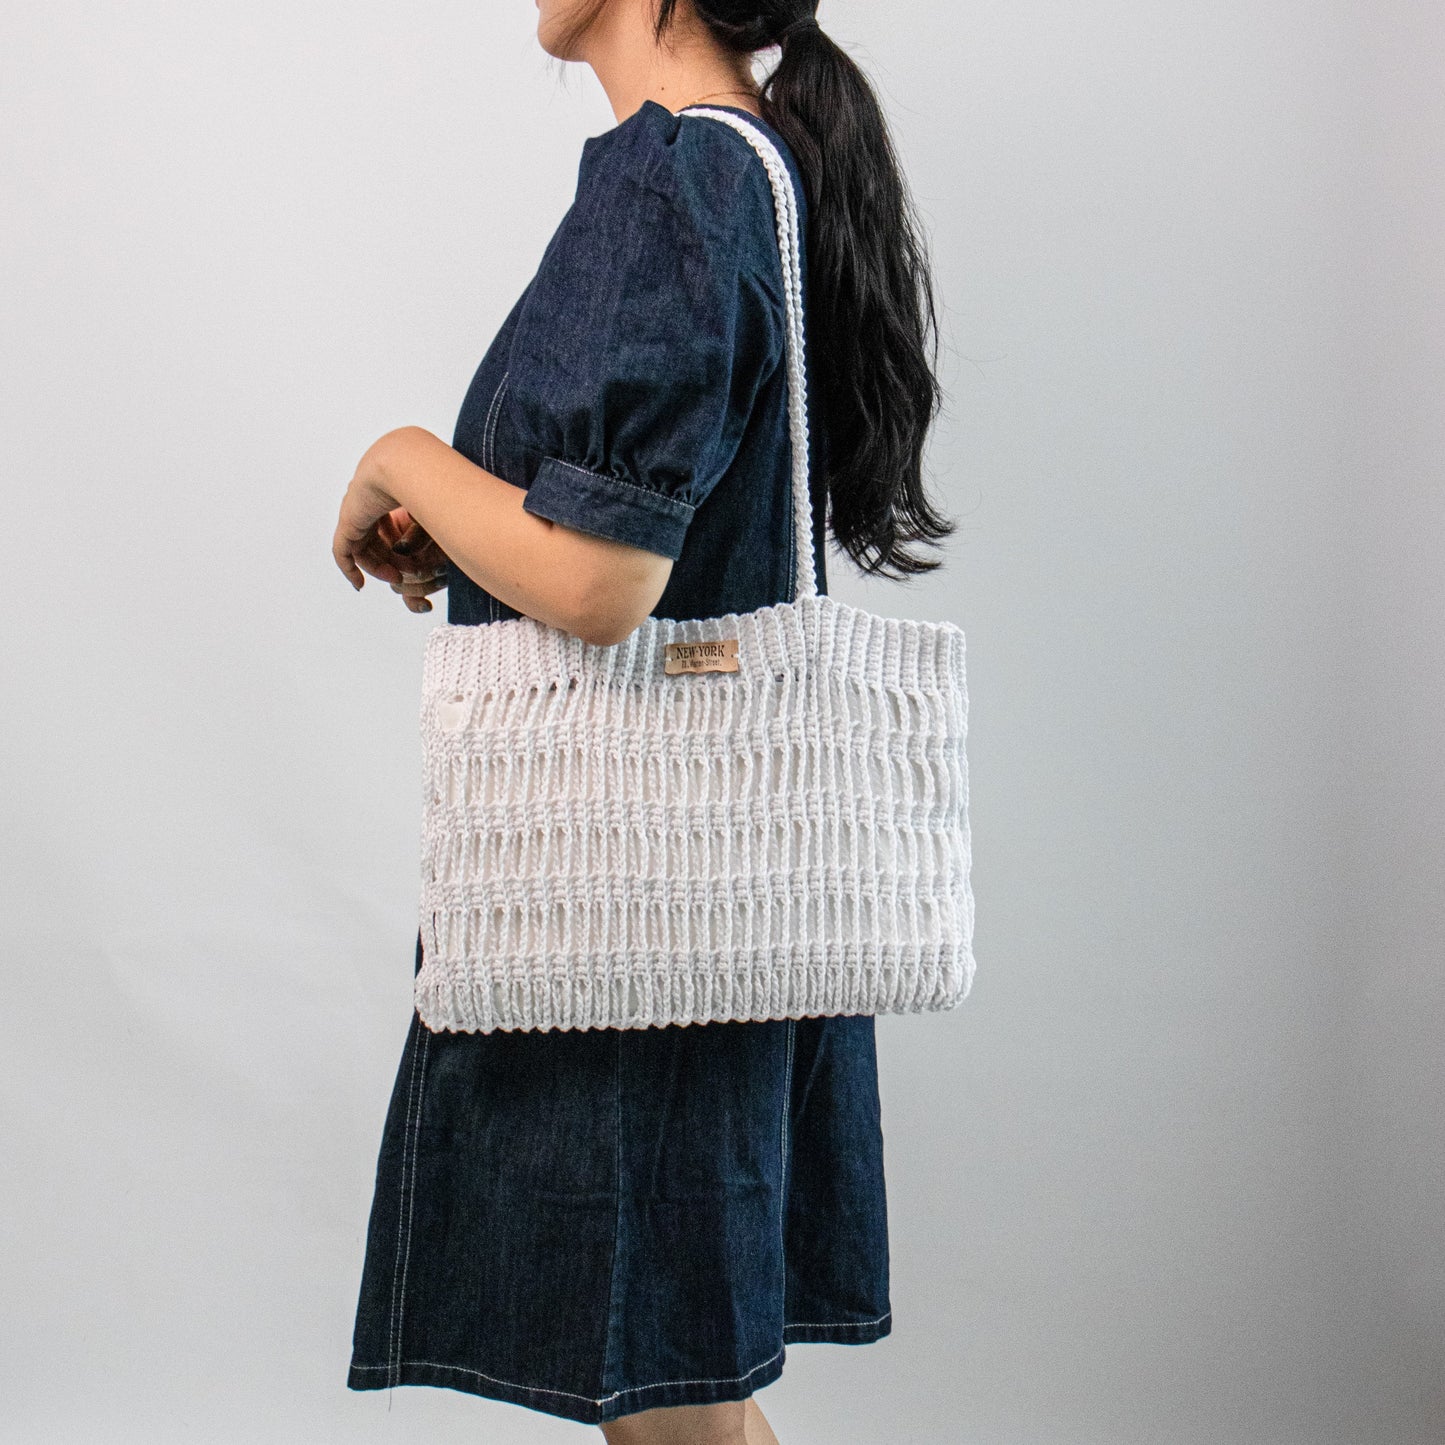 DIY Package | Lire Square Net Bag